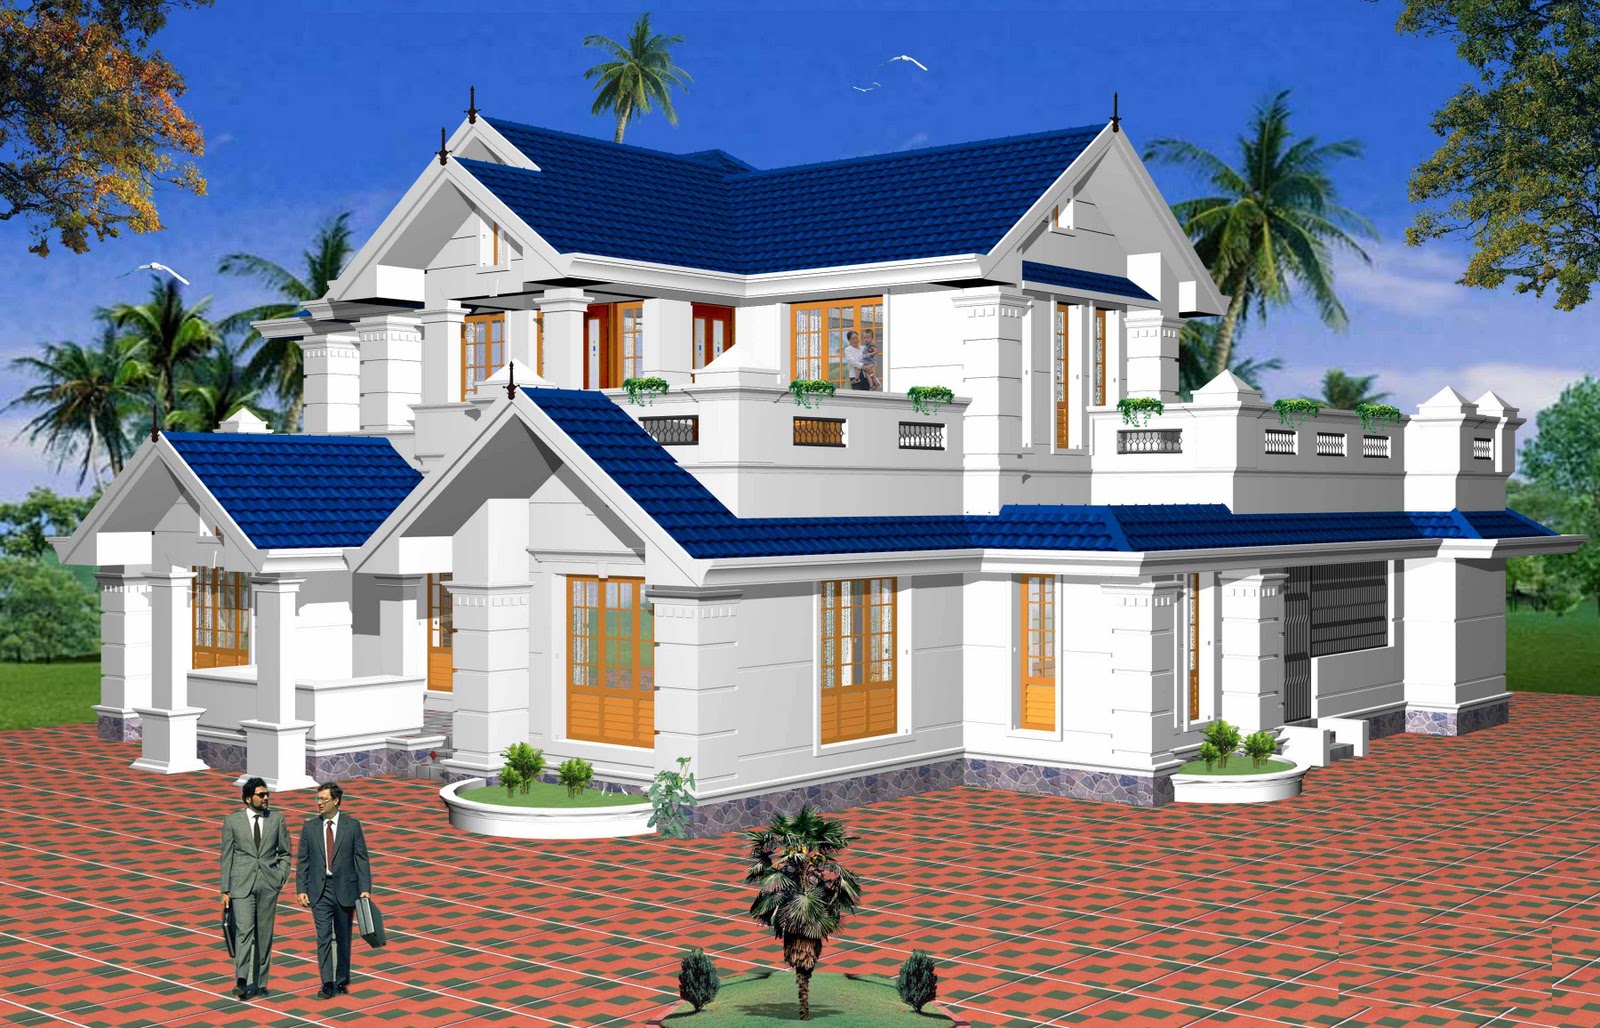 Architectural Design Home House Plans